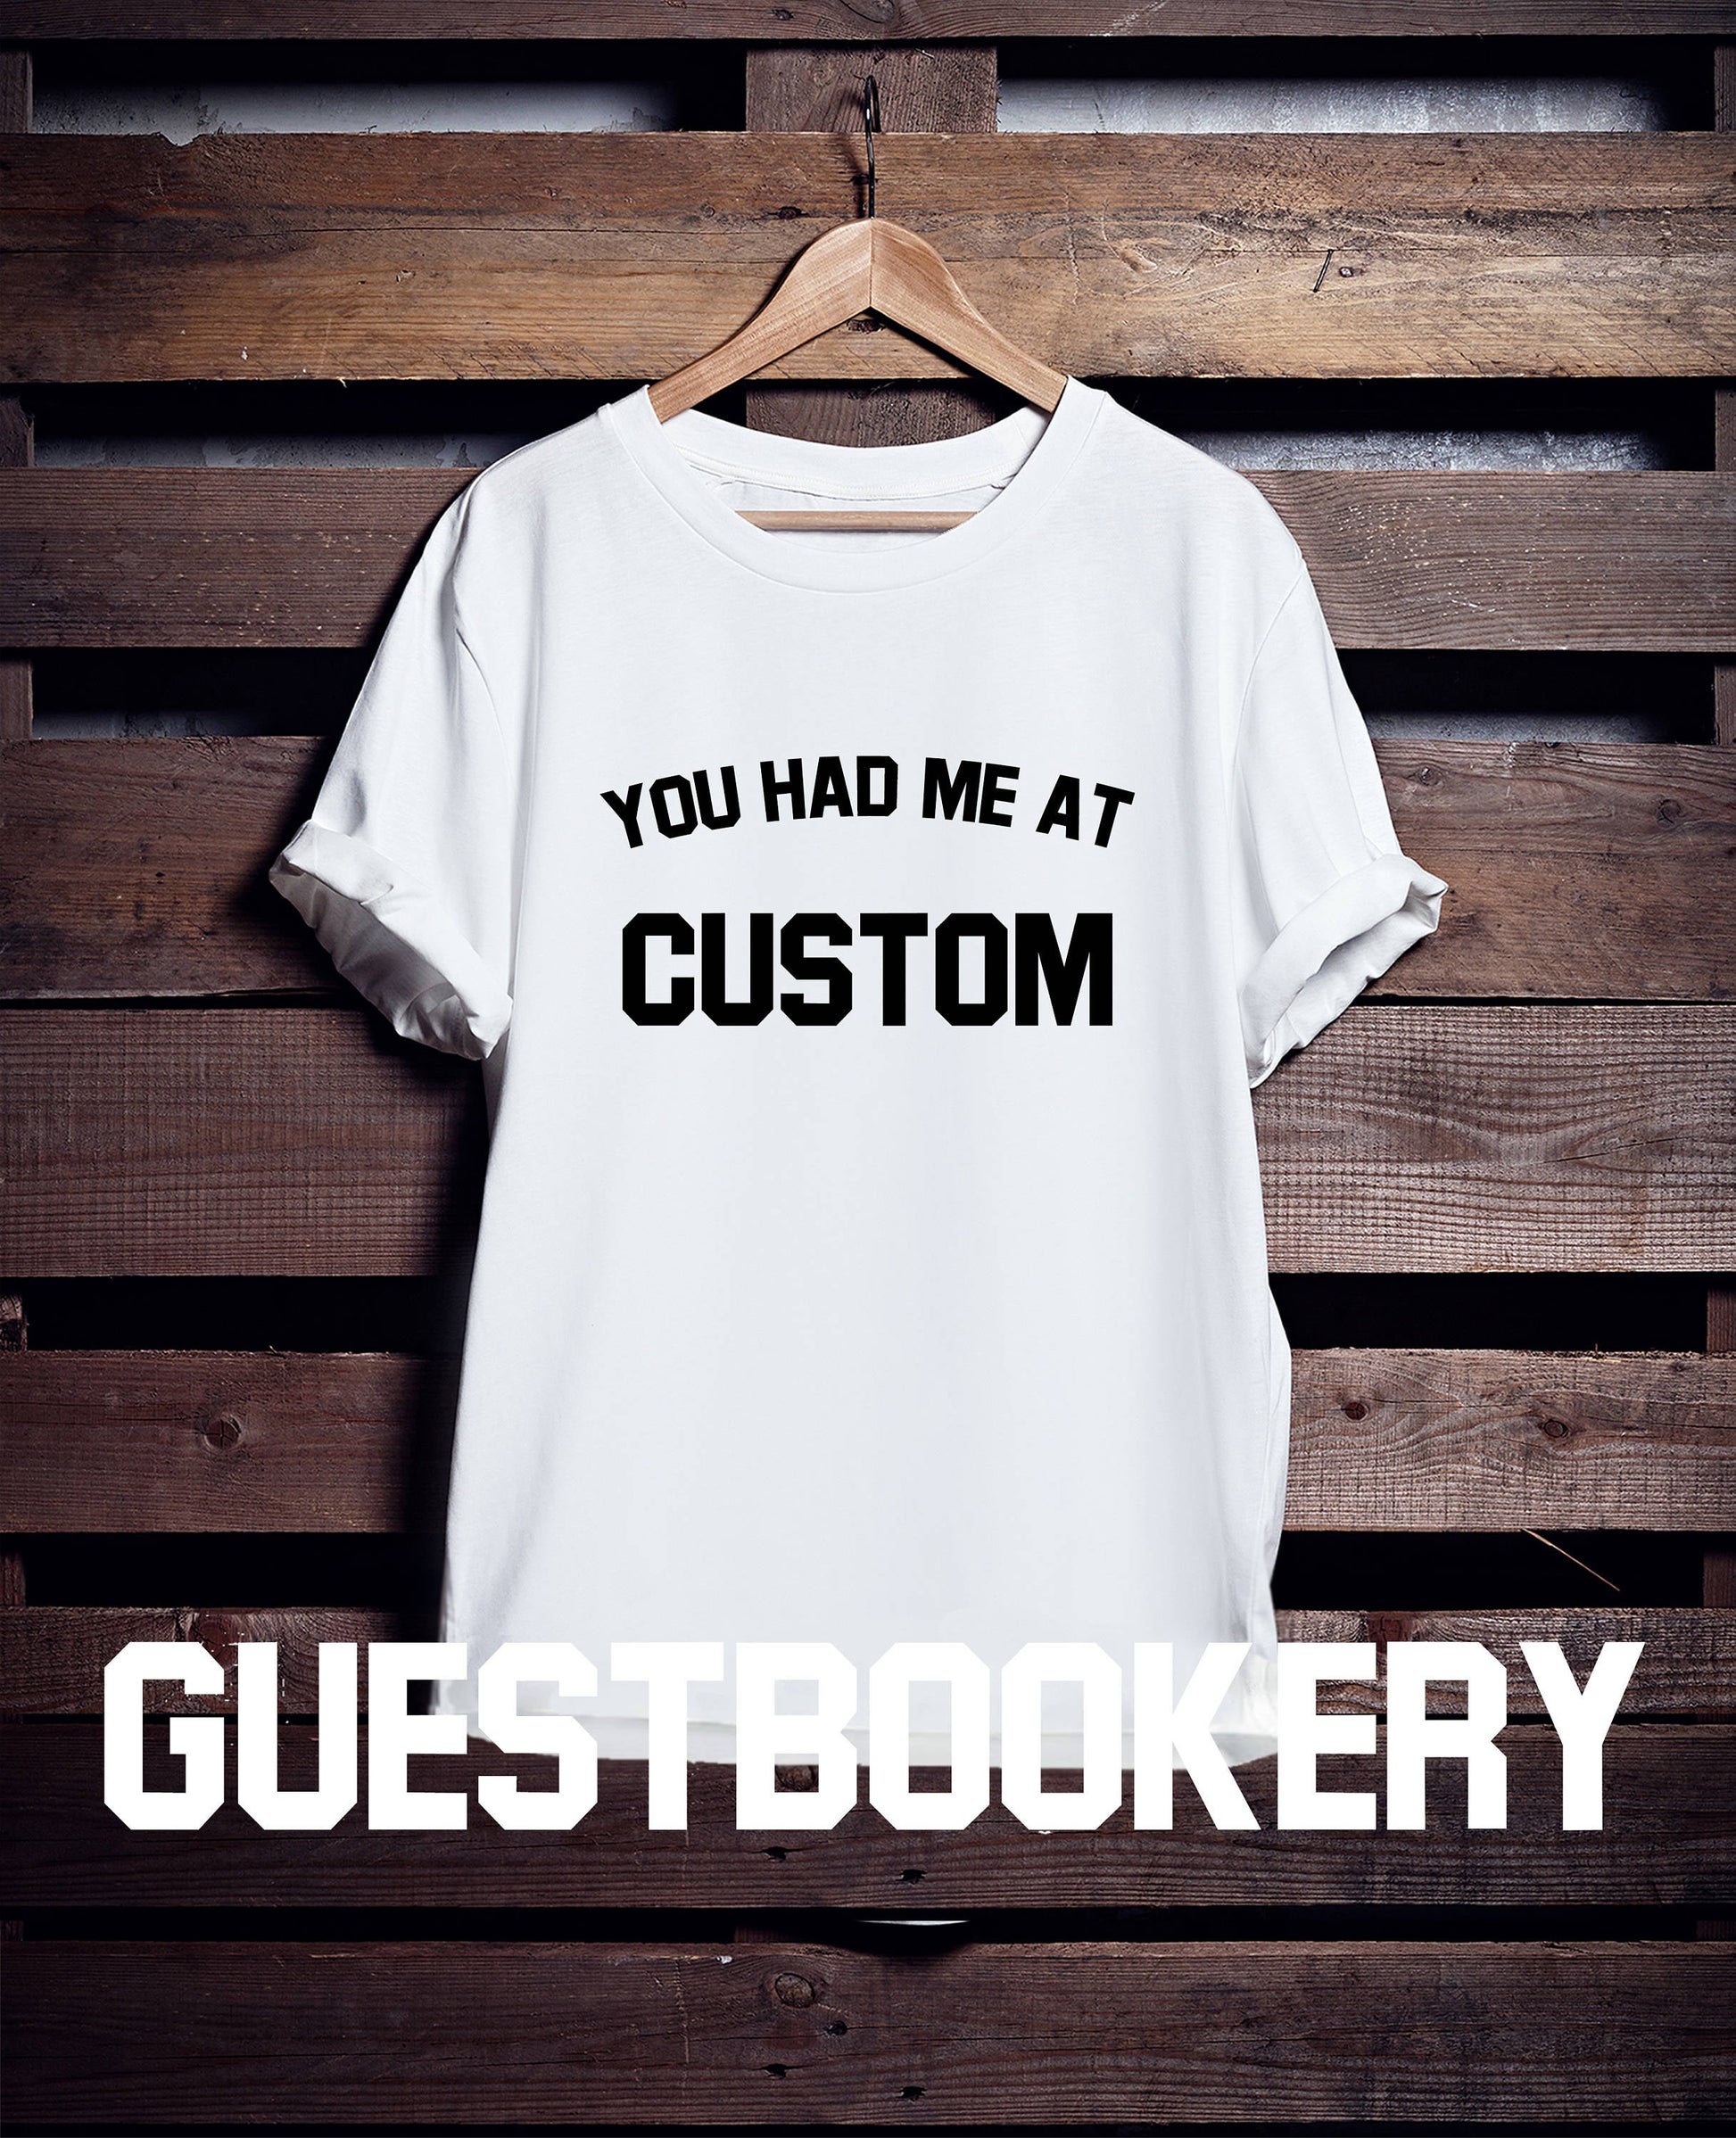 You Had Me At Custom T-Shirt